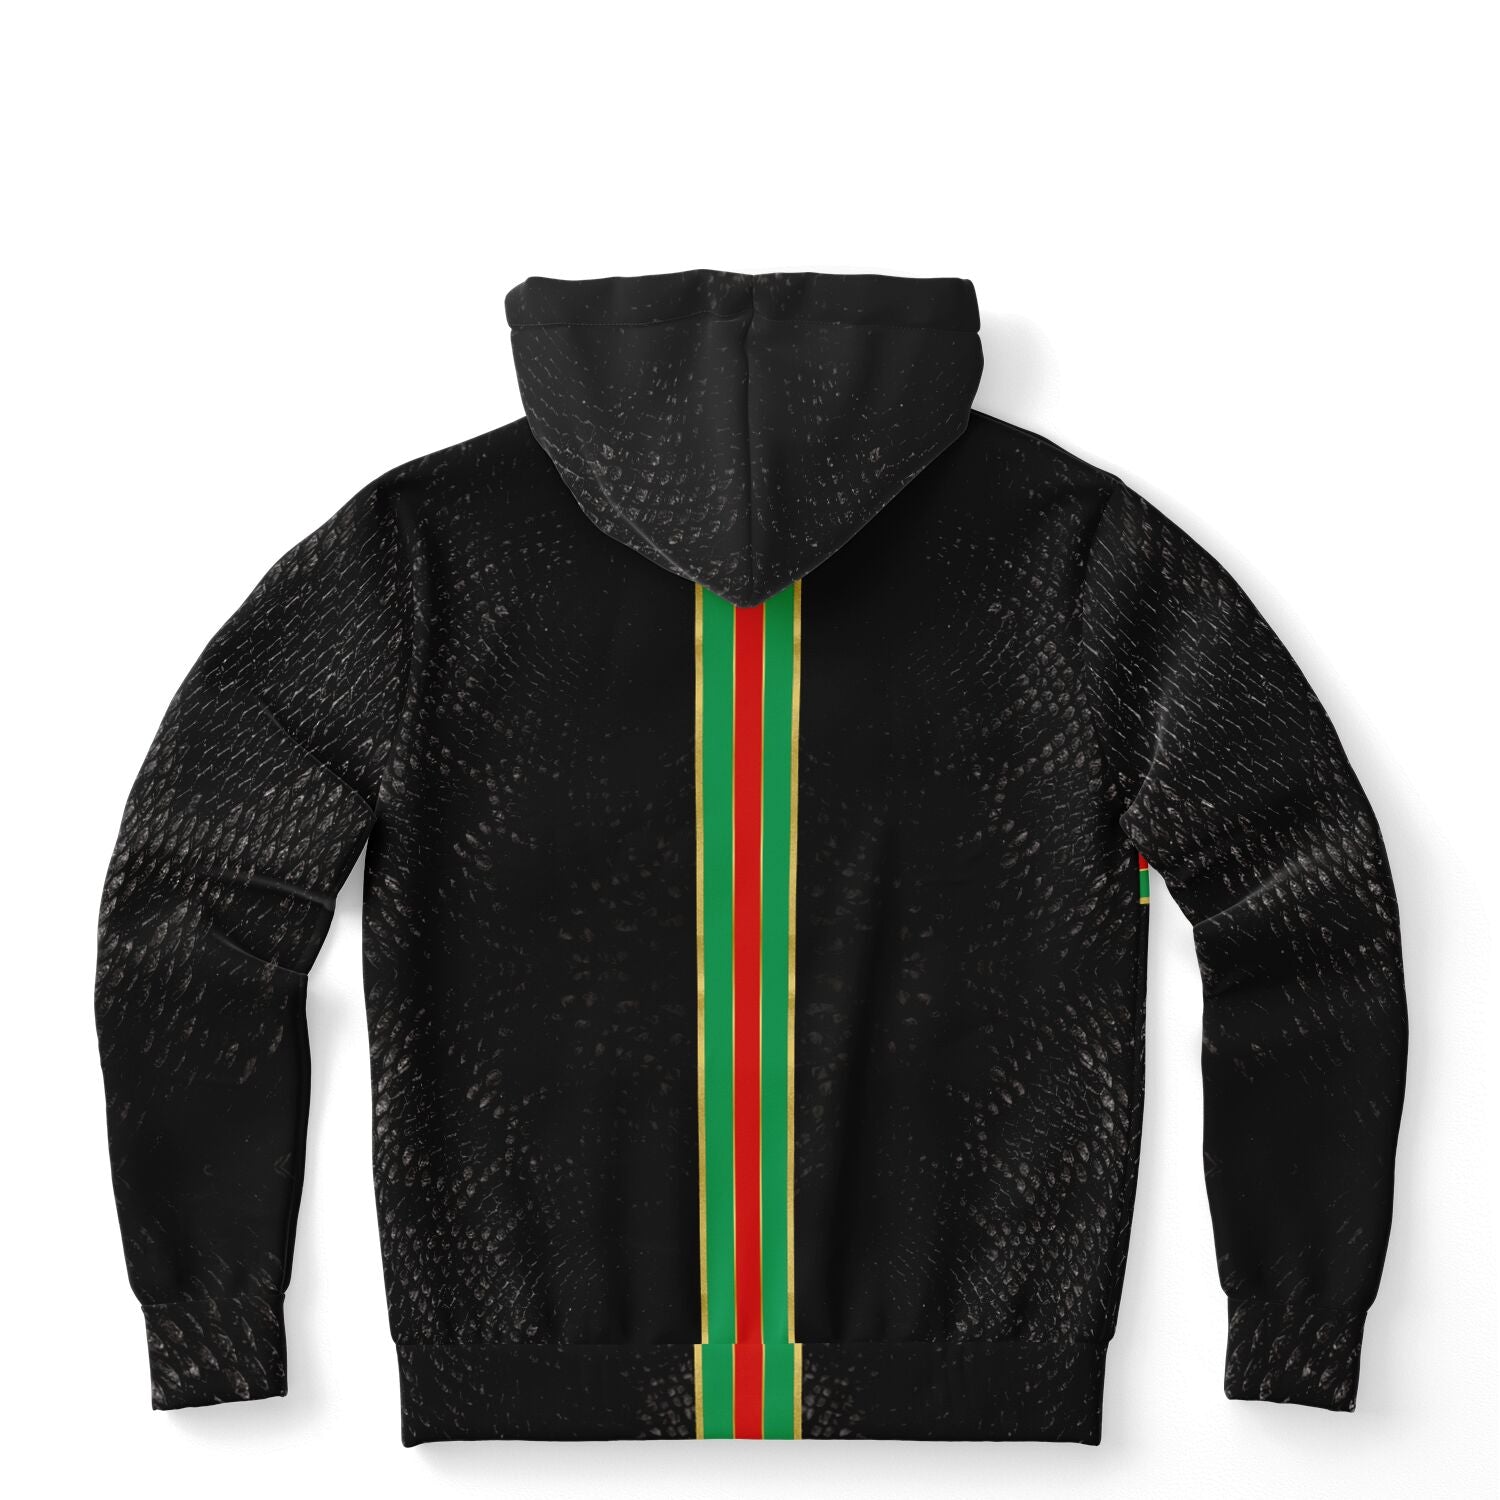 cool hoodie with snake skin print